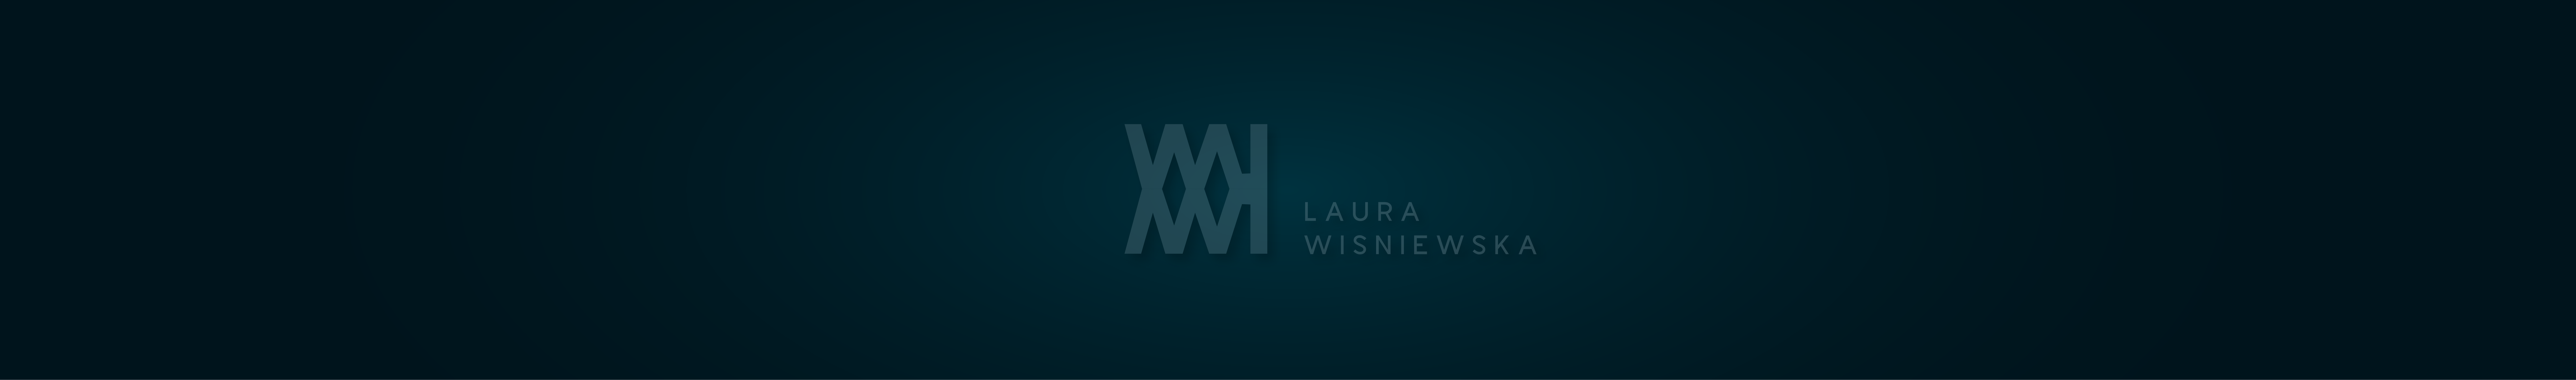 Laura Wiśniewska's profile banner